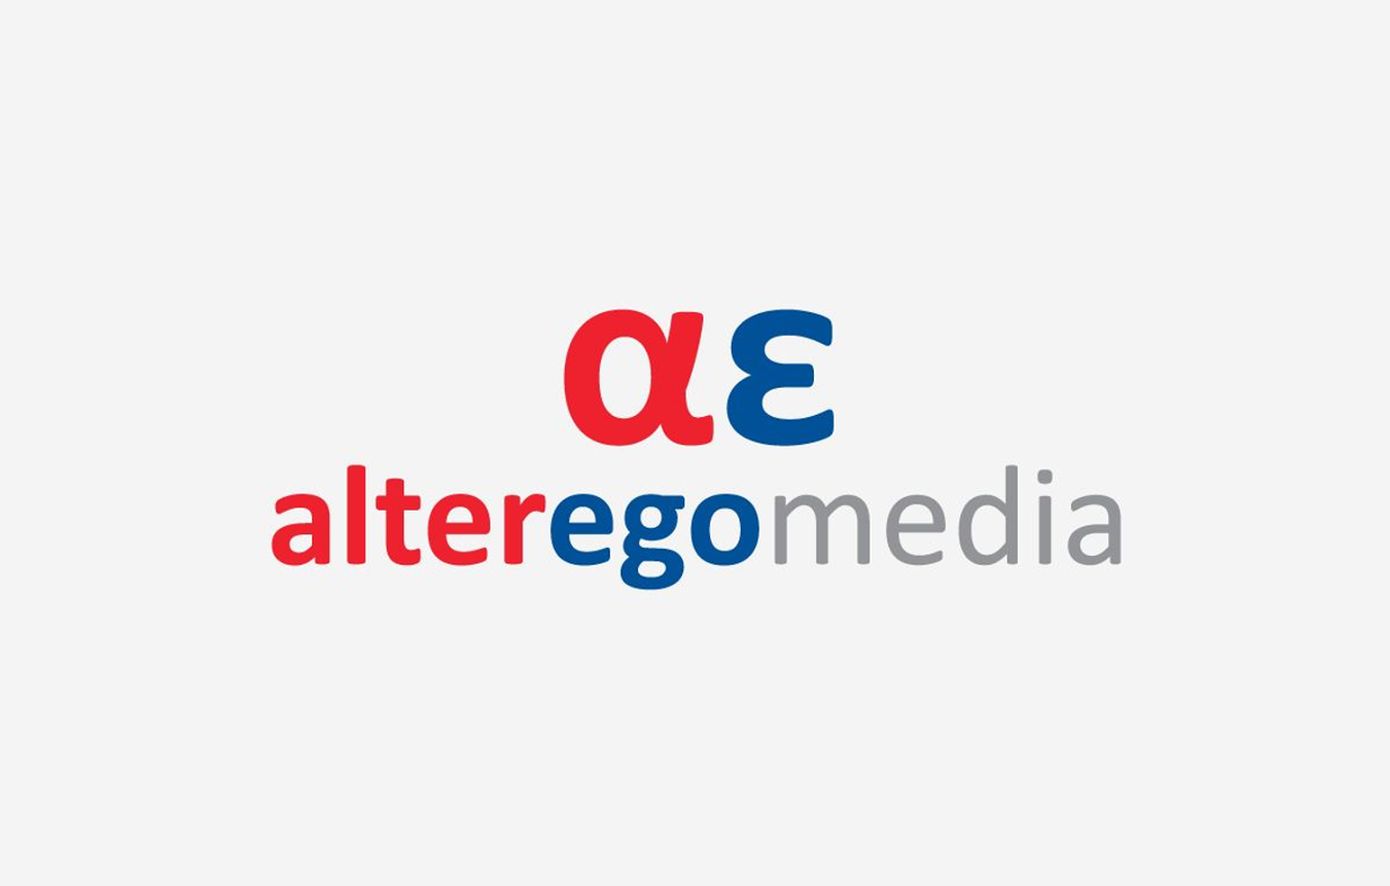 Alter Ego Media: Οι χαρακτηρισμοί για «οργανωμένα οικονομικά συμφέροντα» δεν μας αφορούν και δεν μας αγγίζουν